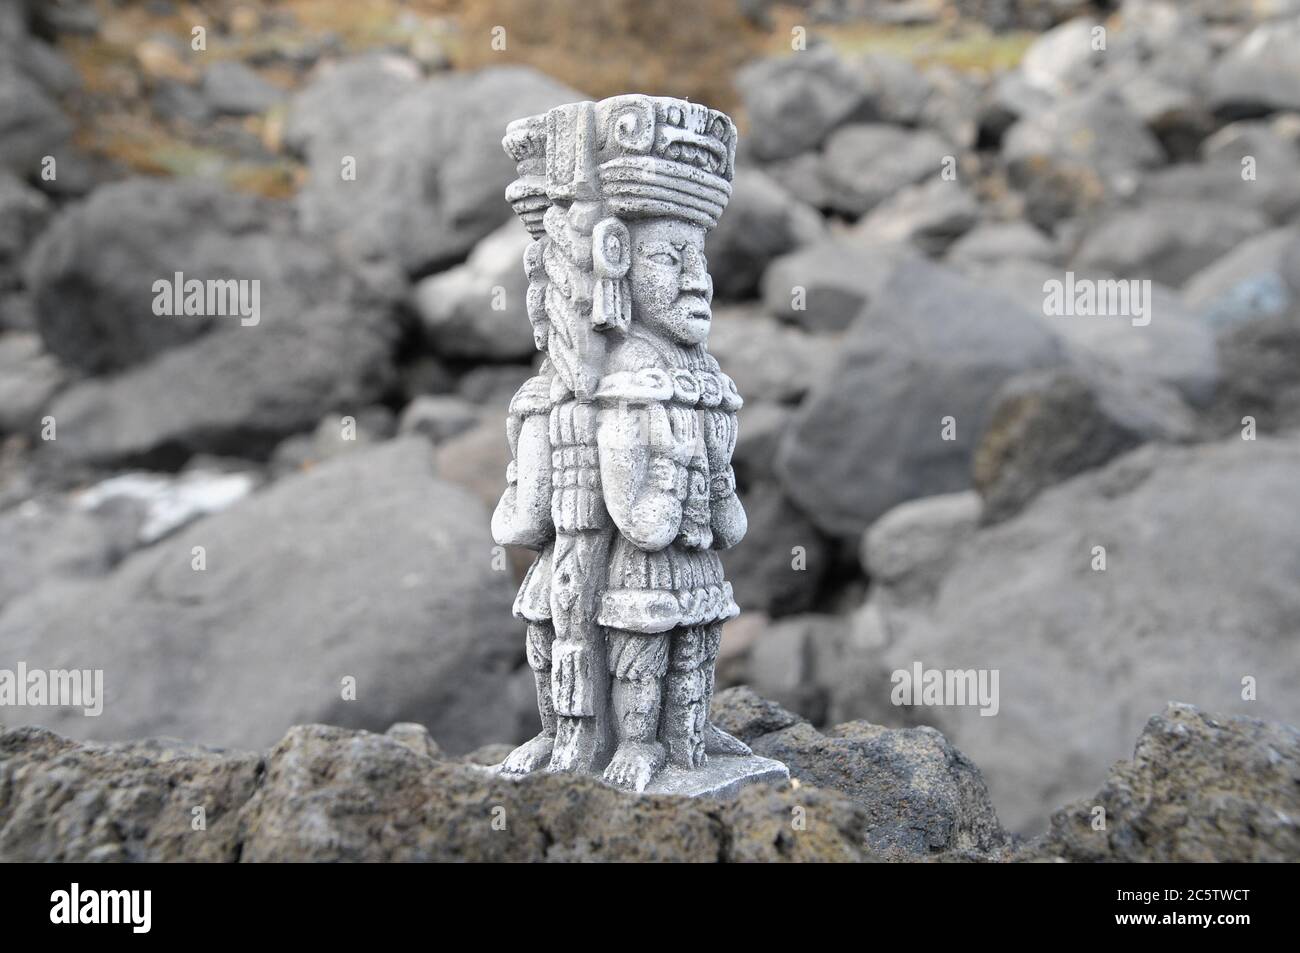 Ancient Maya Statue on the Rocks near the Ocean Stock Photo